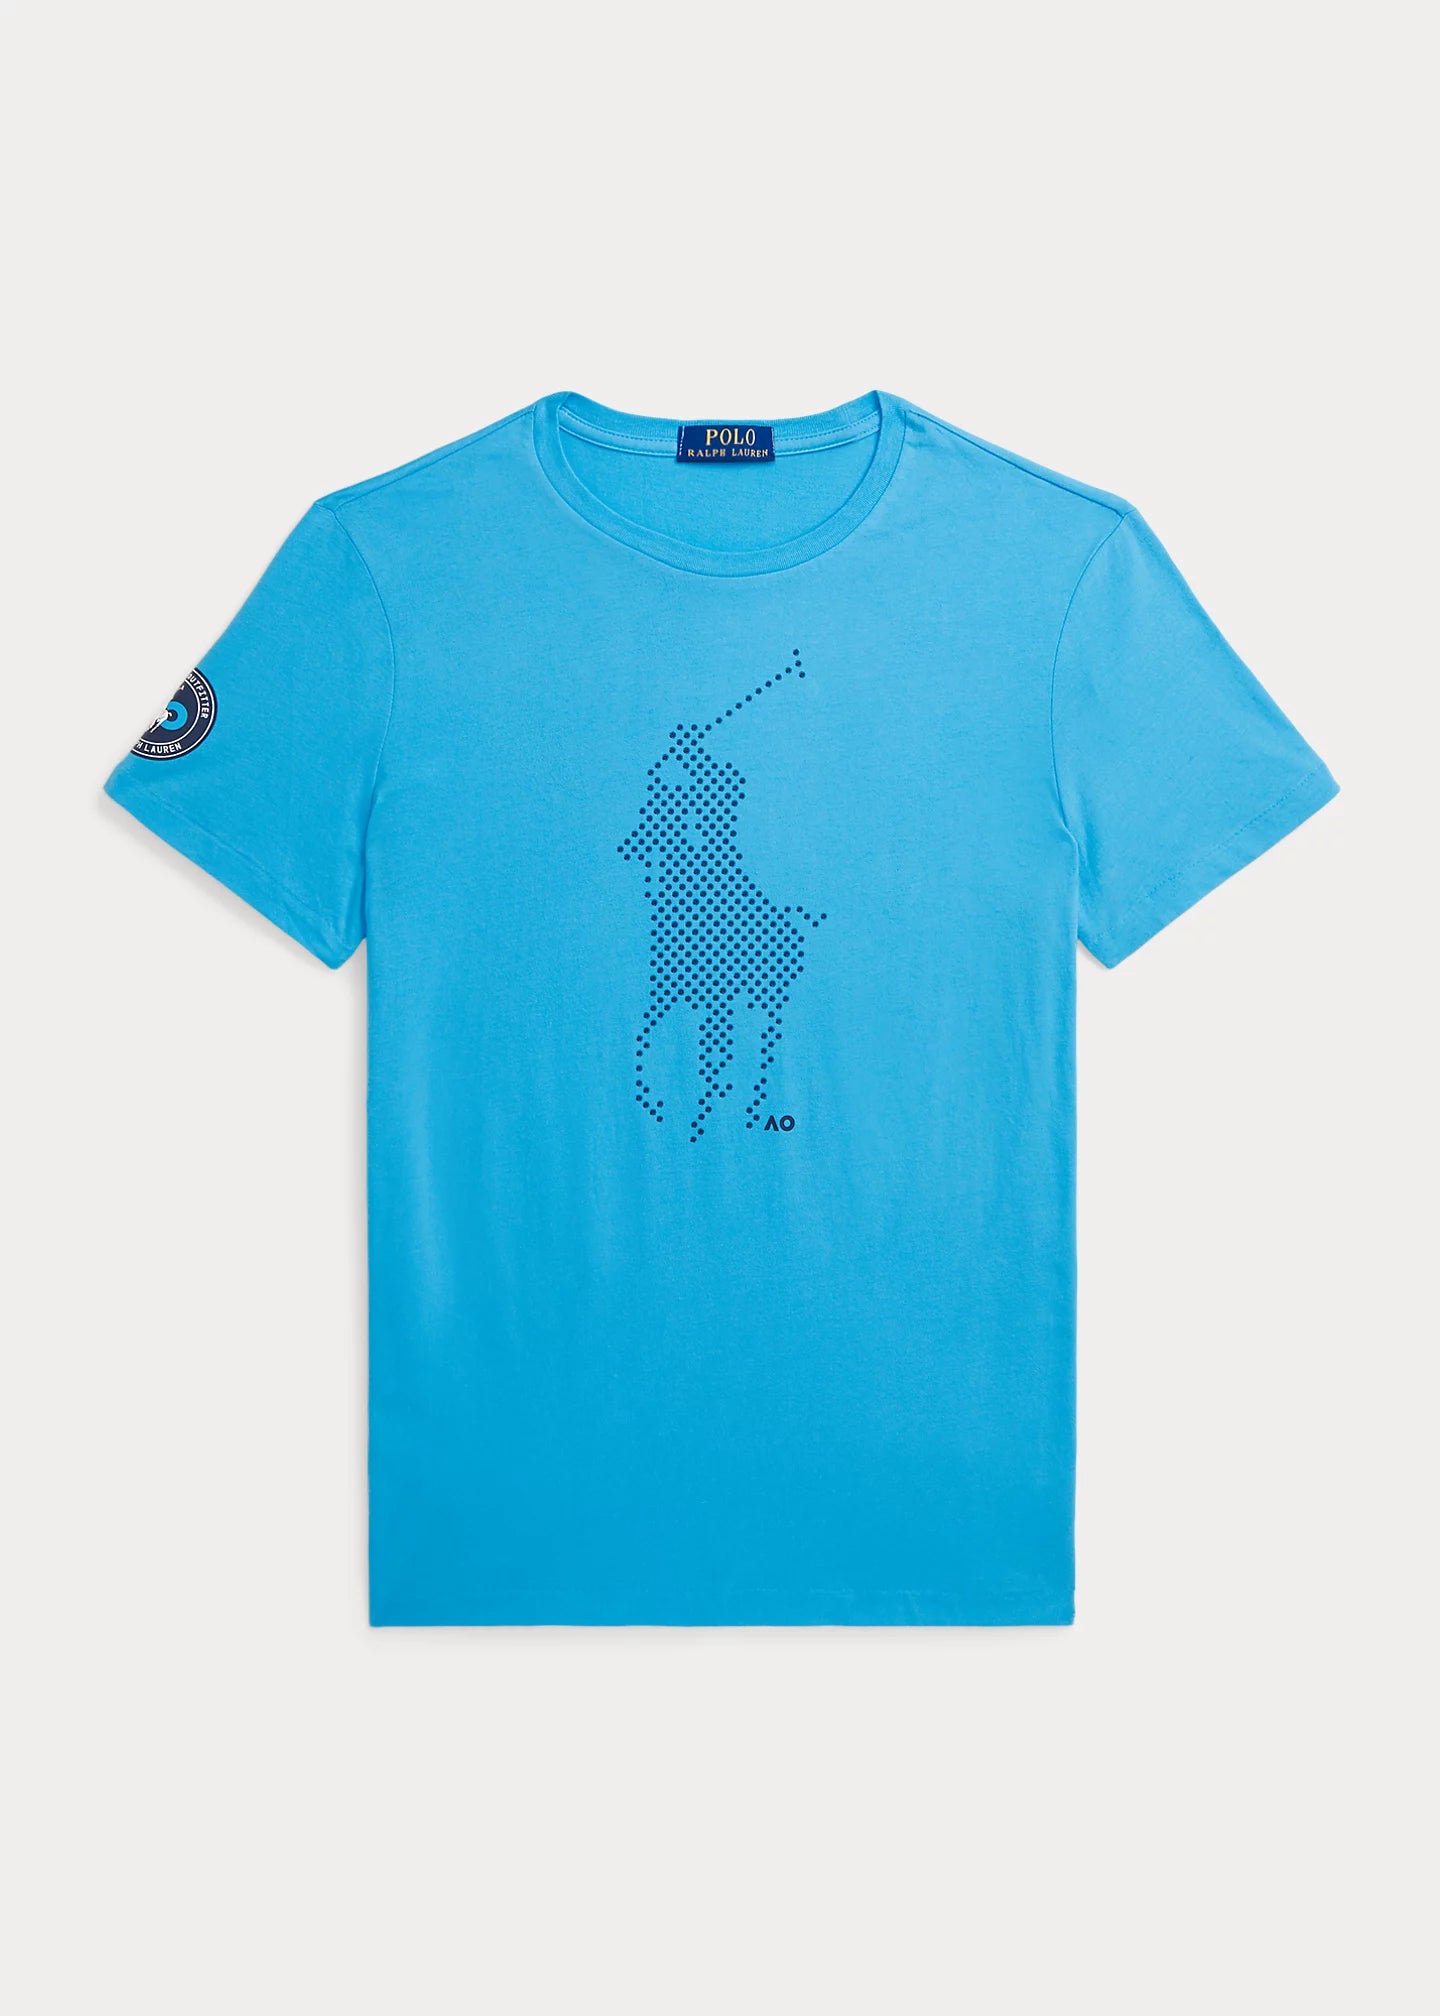 Blue Men's T-shirt Polo Horse Front View Product Shot